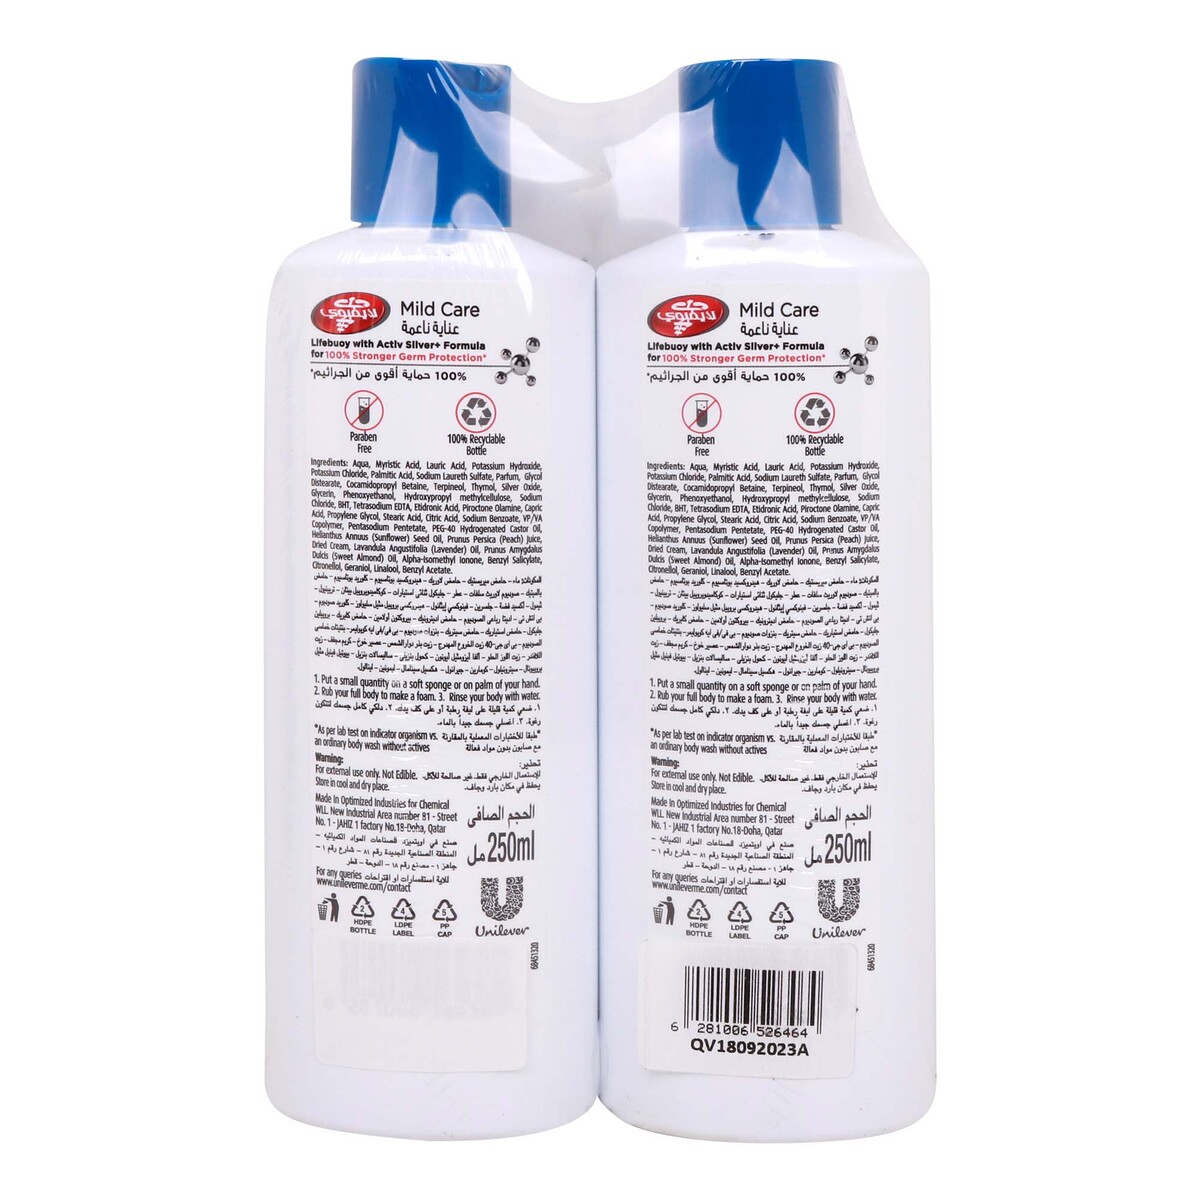 Lifebuoy Mild Care Anti-Bacterial Bodywash Activ Silver + Formula, 2 x 250 ml